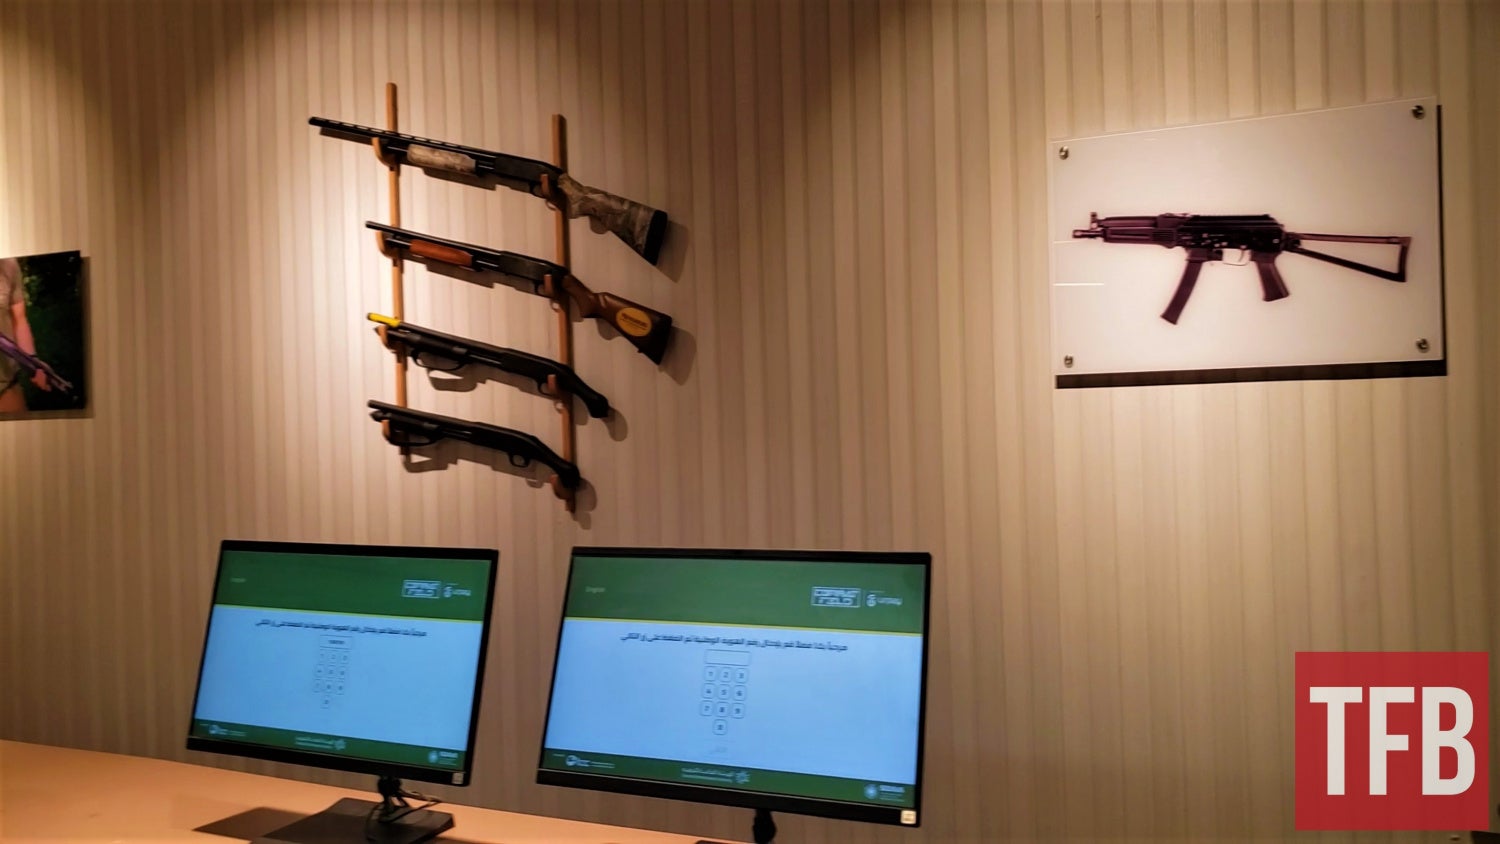 Most long guns you see for sale in Saudi Arabia are 12 gauge shotguns